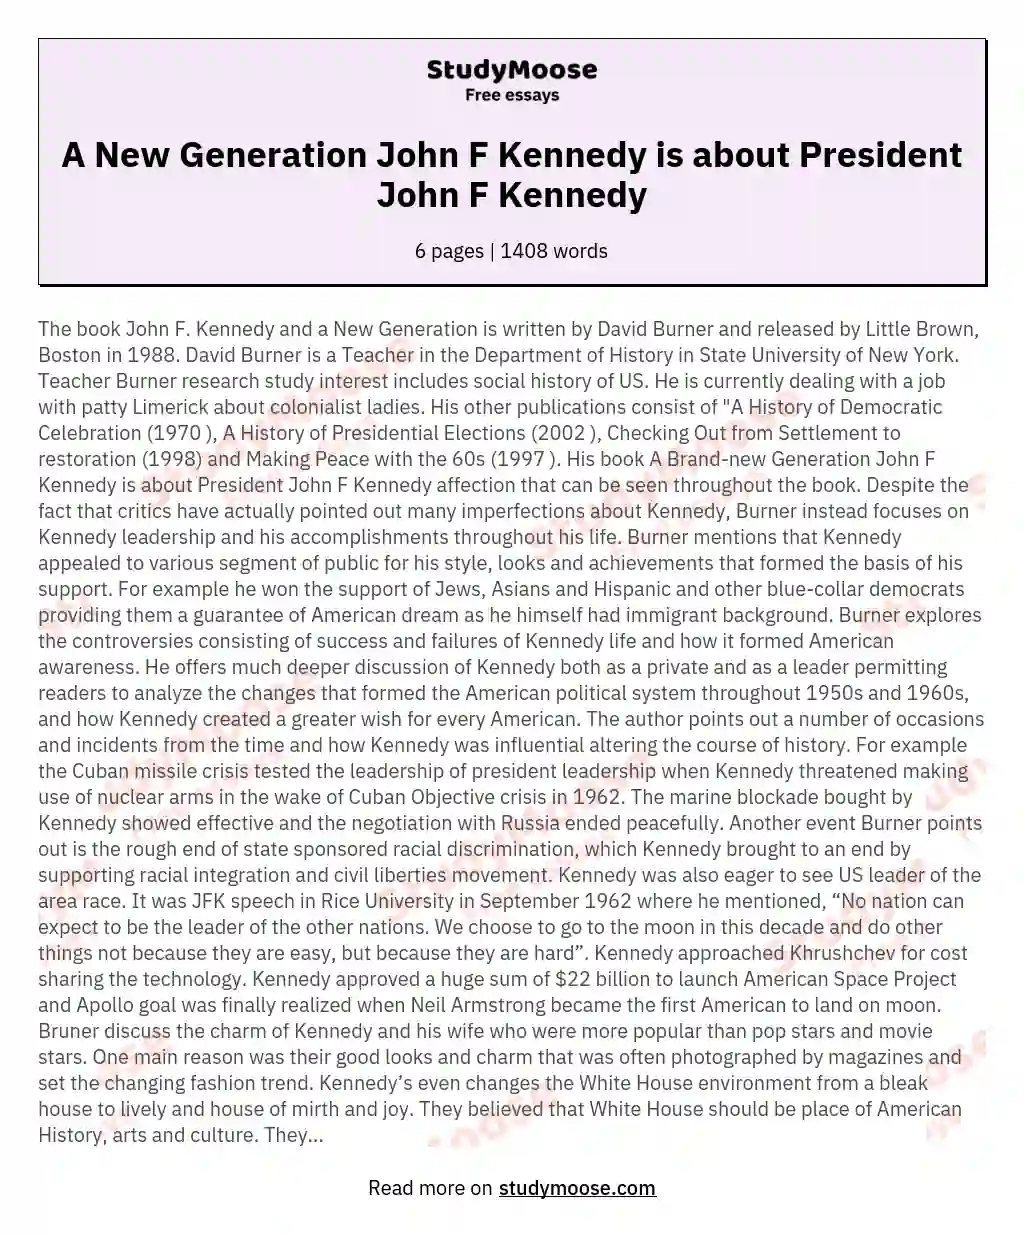 A New Generation John F Kennedy is about President John F Kennedy essay